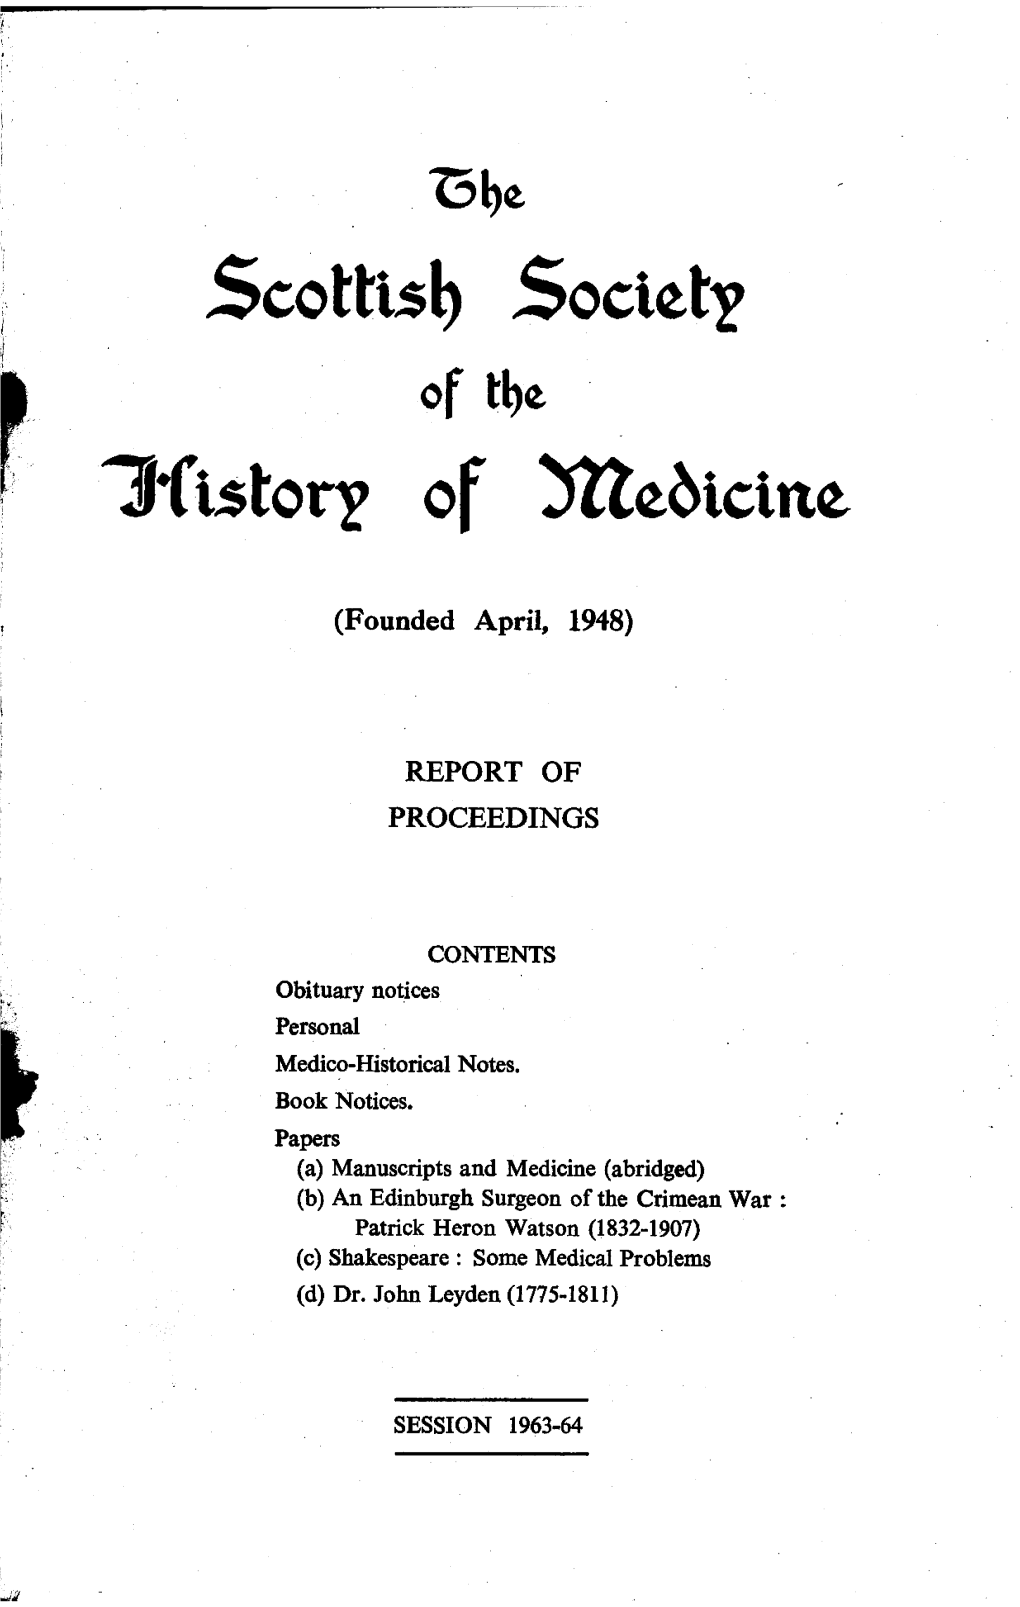 Proceedings for 1963-64